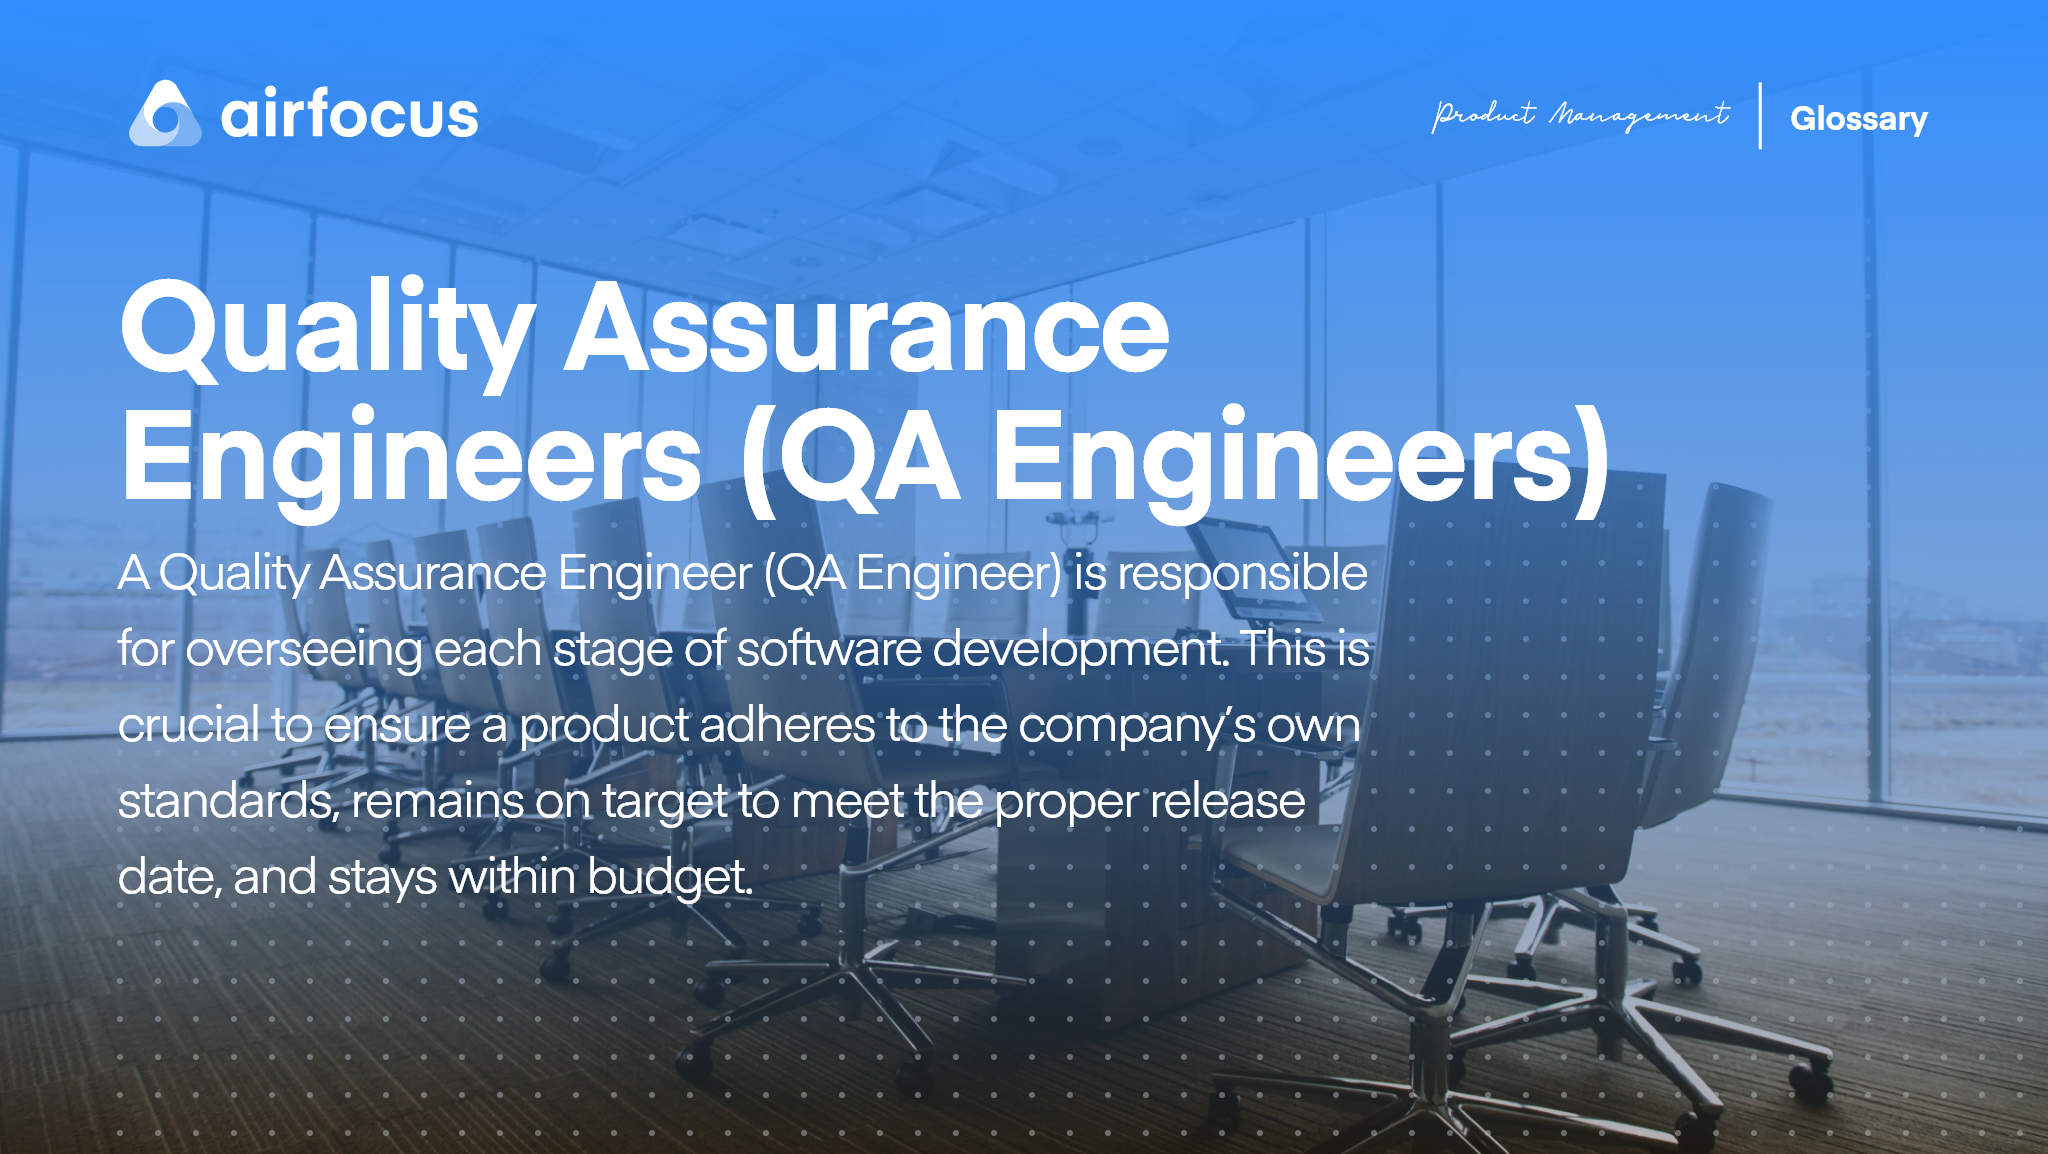 software qa engineer